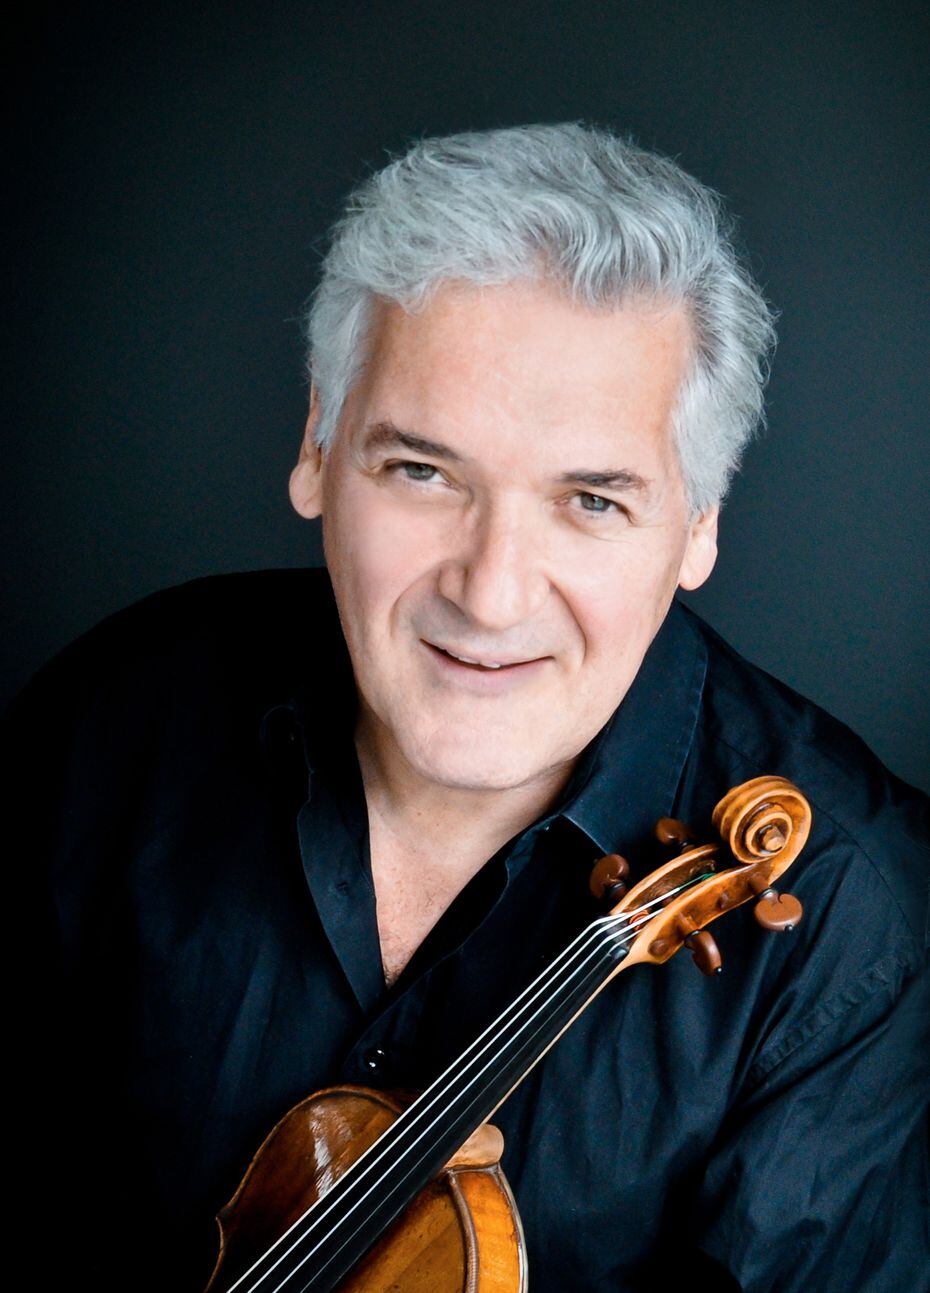 A headshot of Pinchas Zukerman holding a violin.